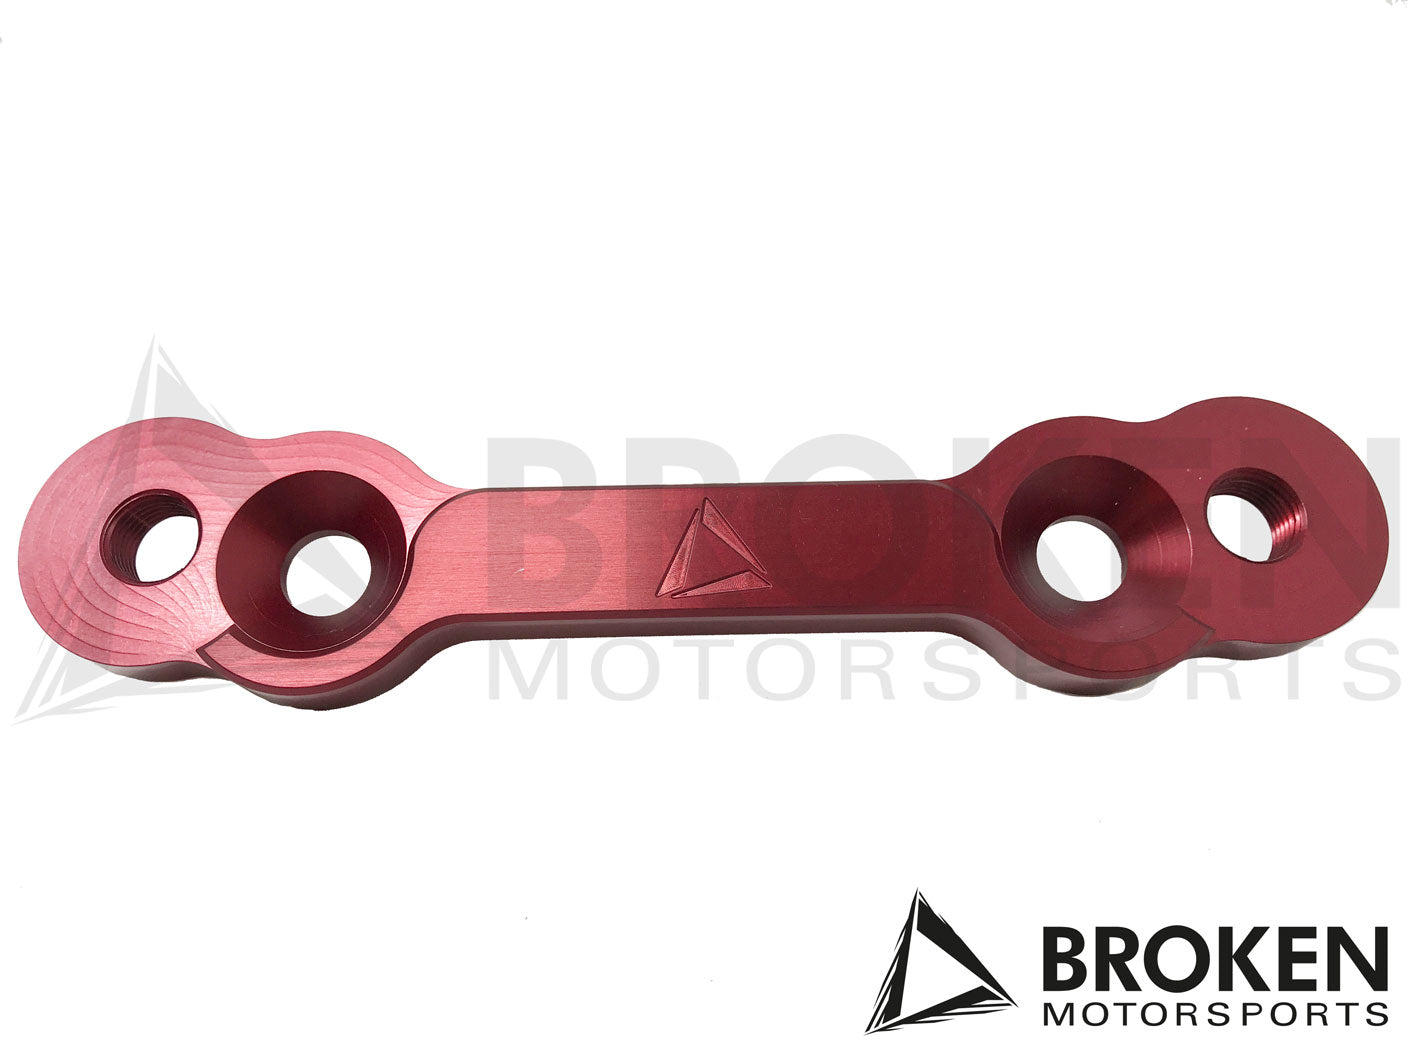 Broken Motorsports - Nissan 370Z/Z34 Front Gravel Brake Bracket kit on Bleeding Tarmac